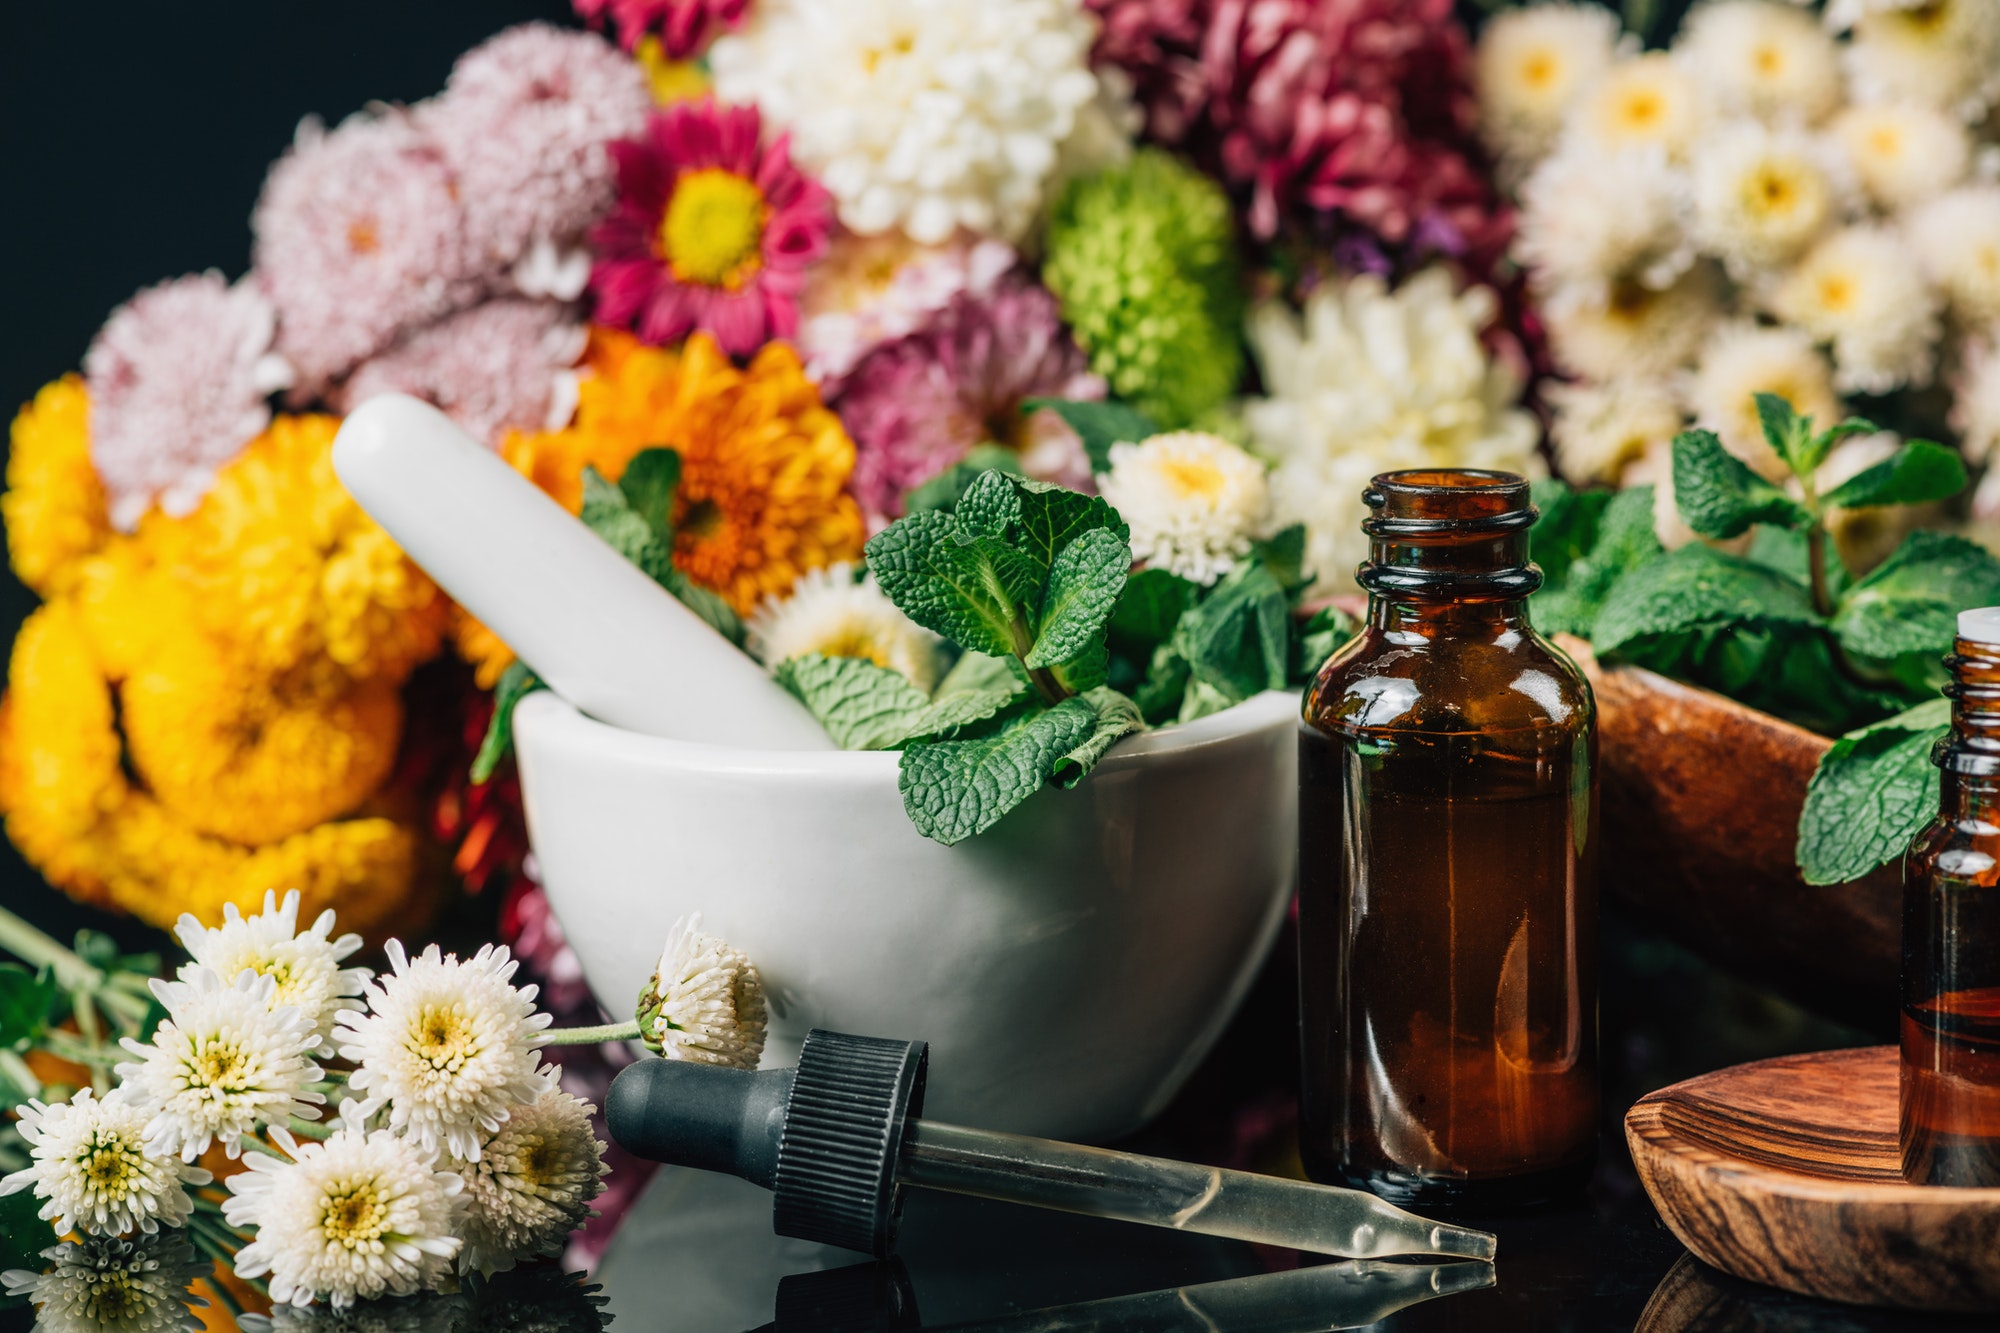 bach-flower-remedies-alternative-herbal-medicine